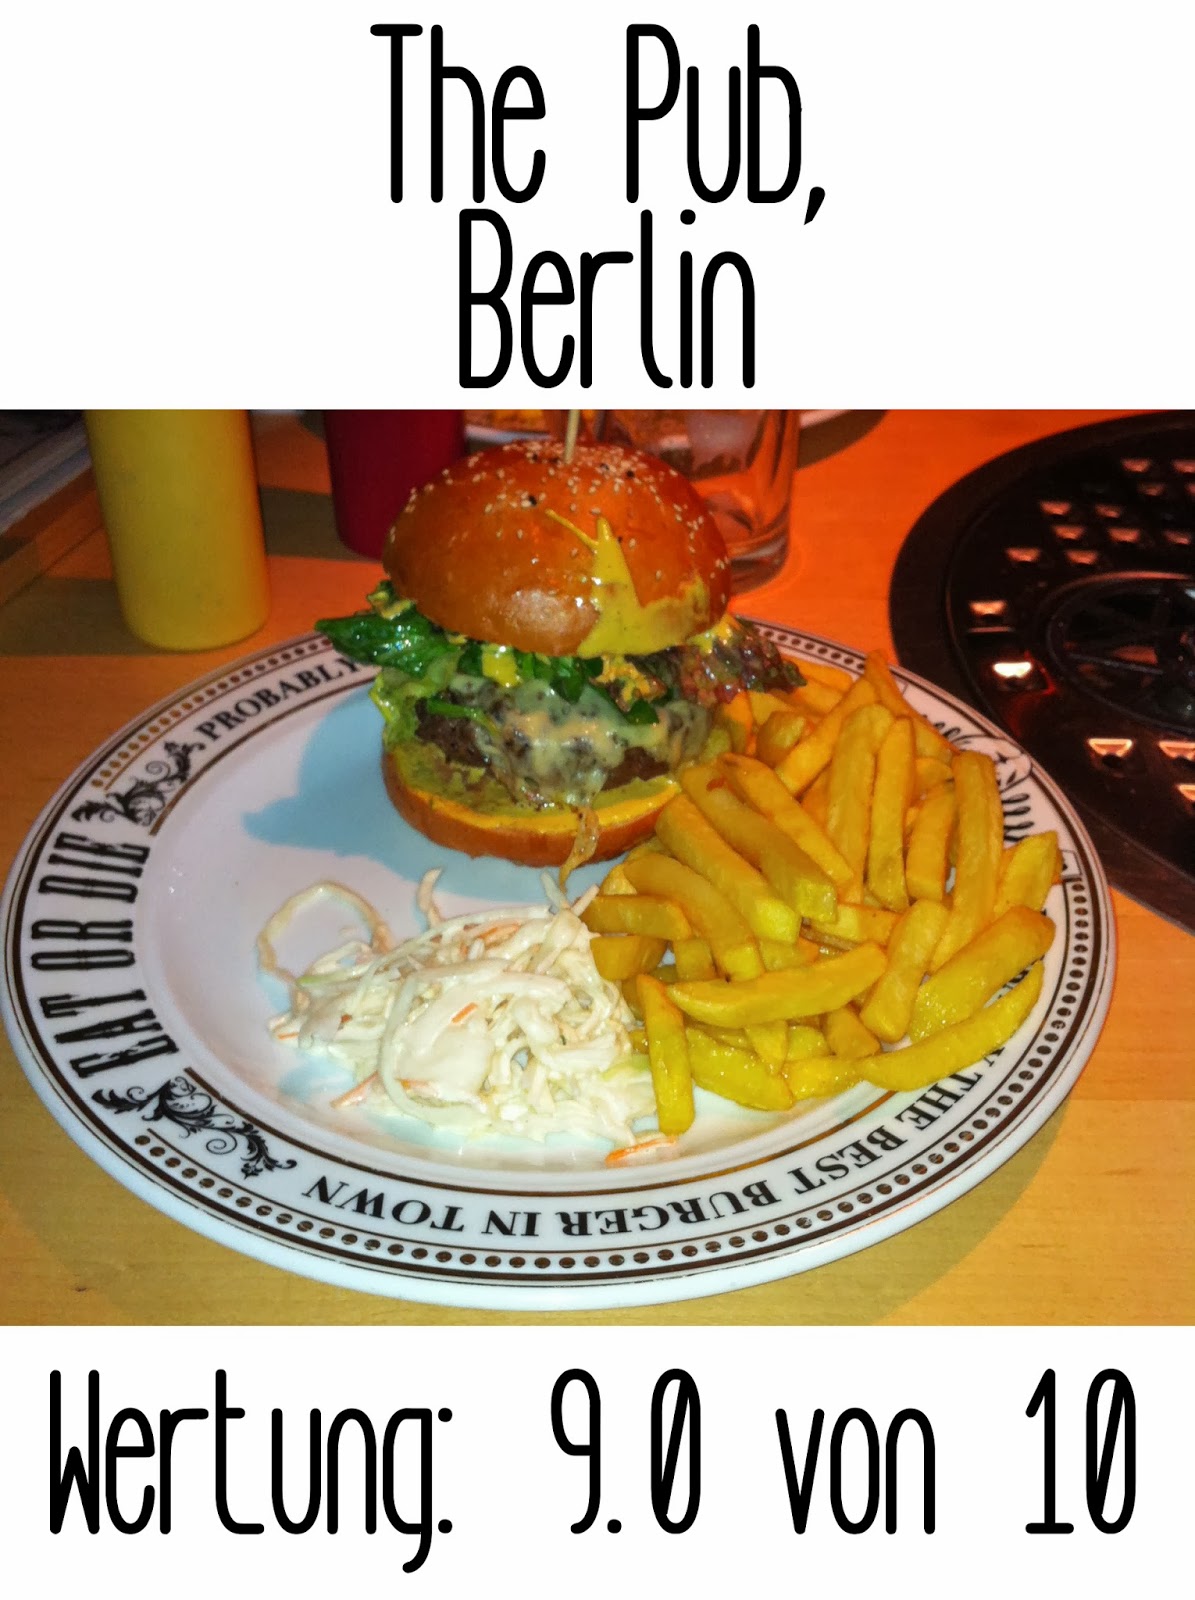 http://germanysbestburger.blogspot.de/2014/02/the-pub-berlin.html